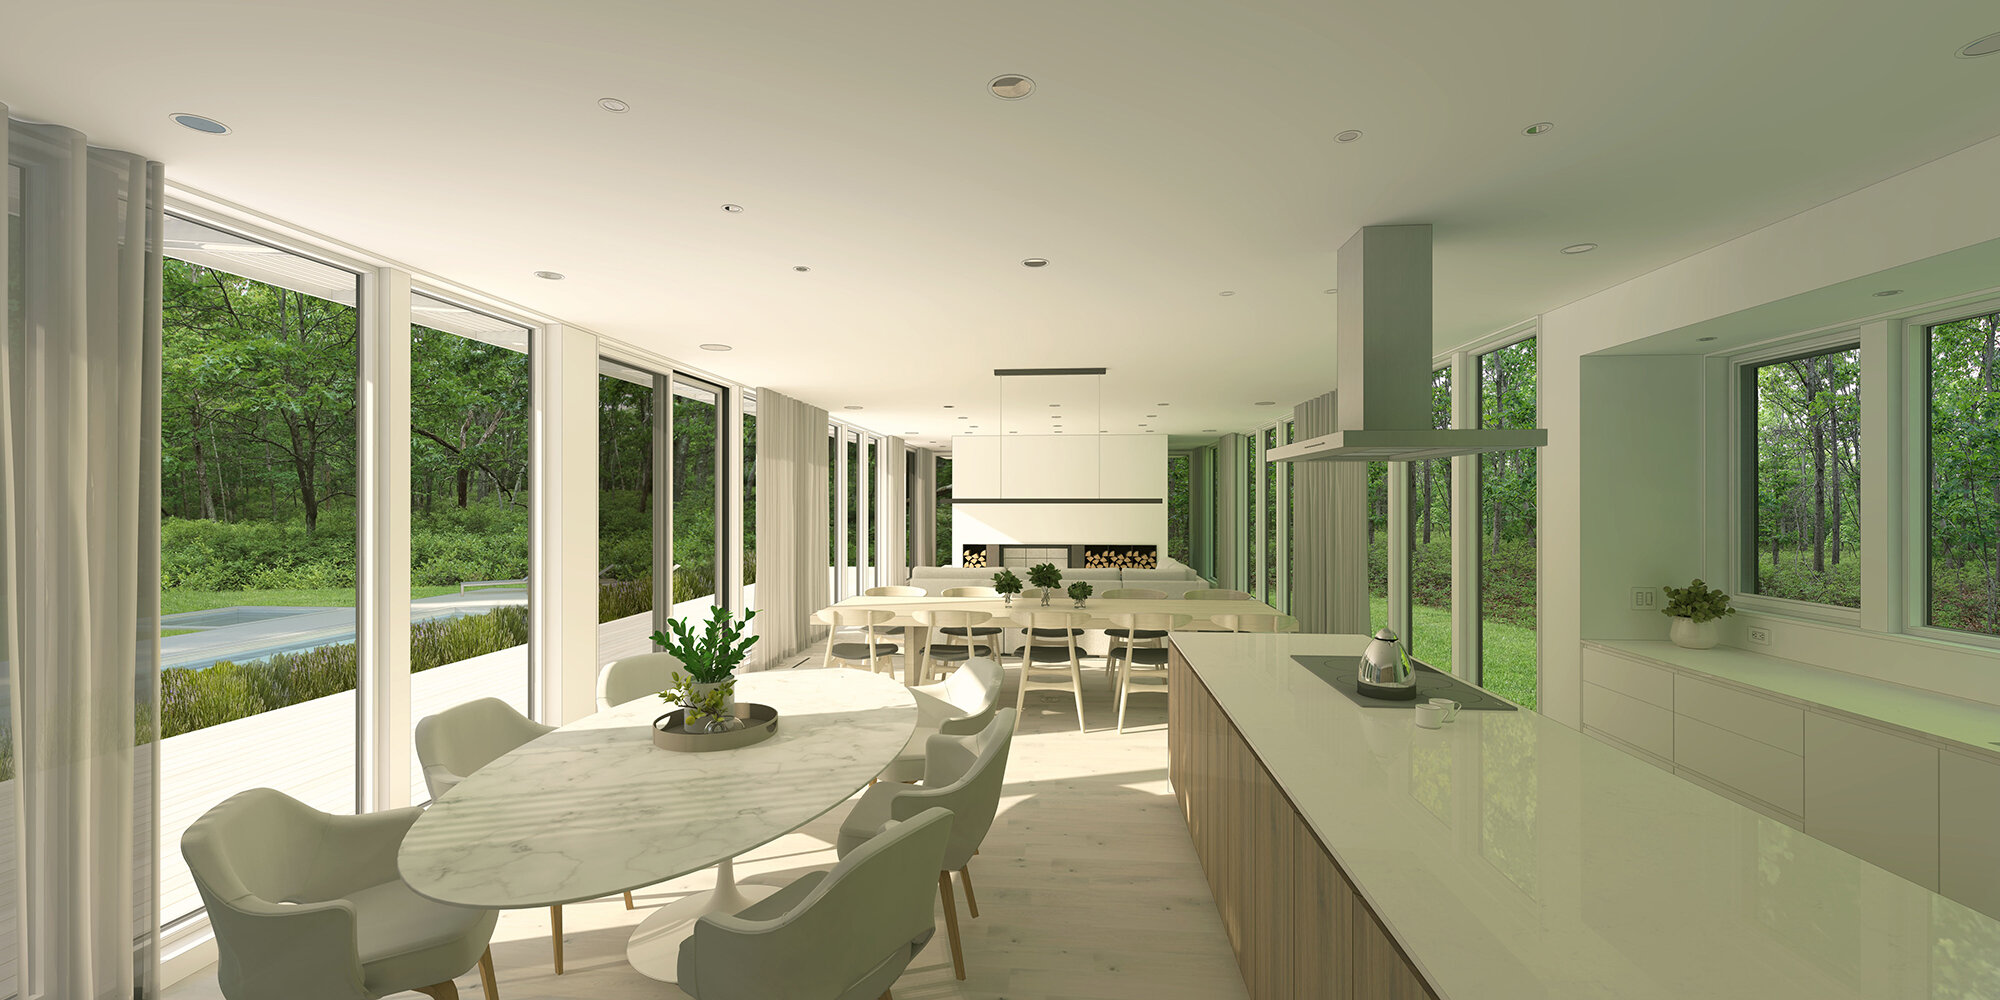 res4-resolution-4-architecture-modern-modular-great-oak-residence-prefab-home-03-living-dining-kitchen.jpg